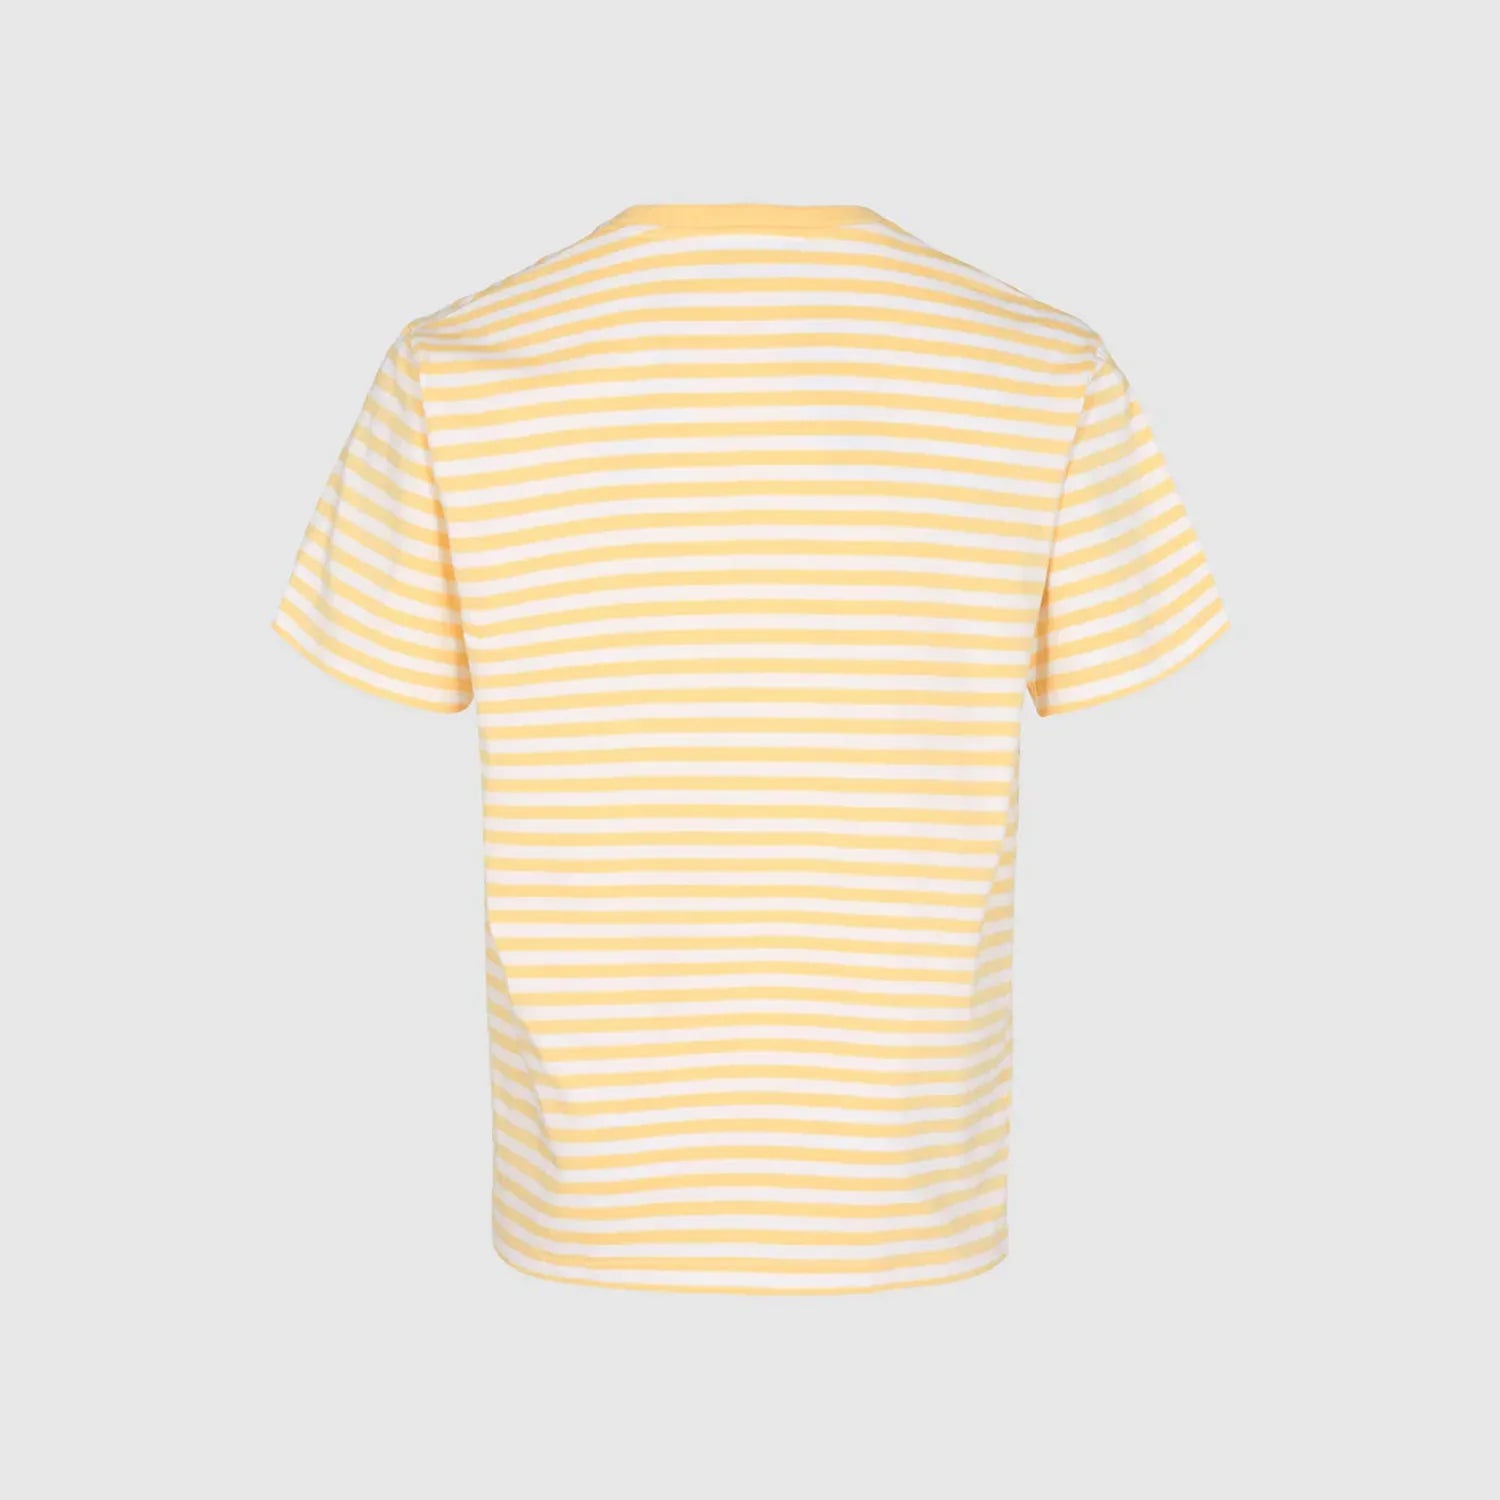 'MINIMUM Jannus 9322 T-Shirt' in 'Golden Fleece' colour